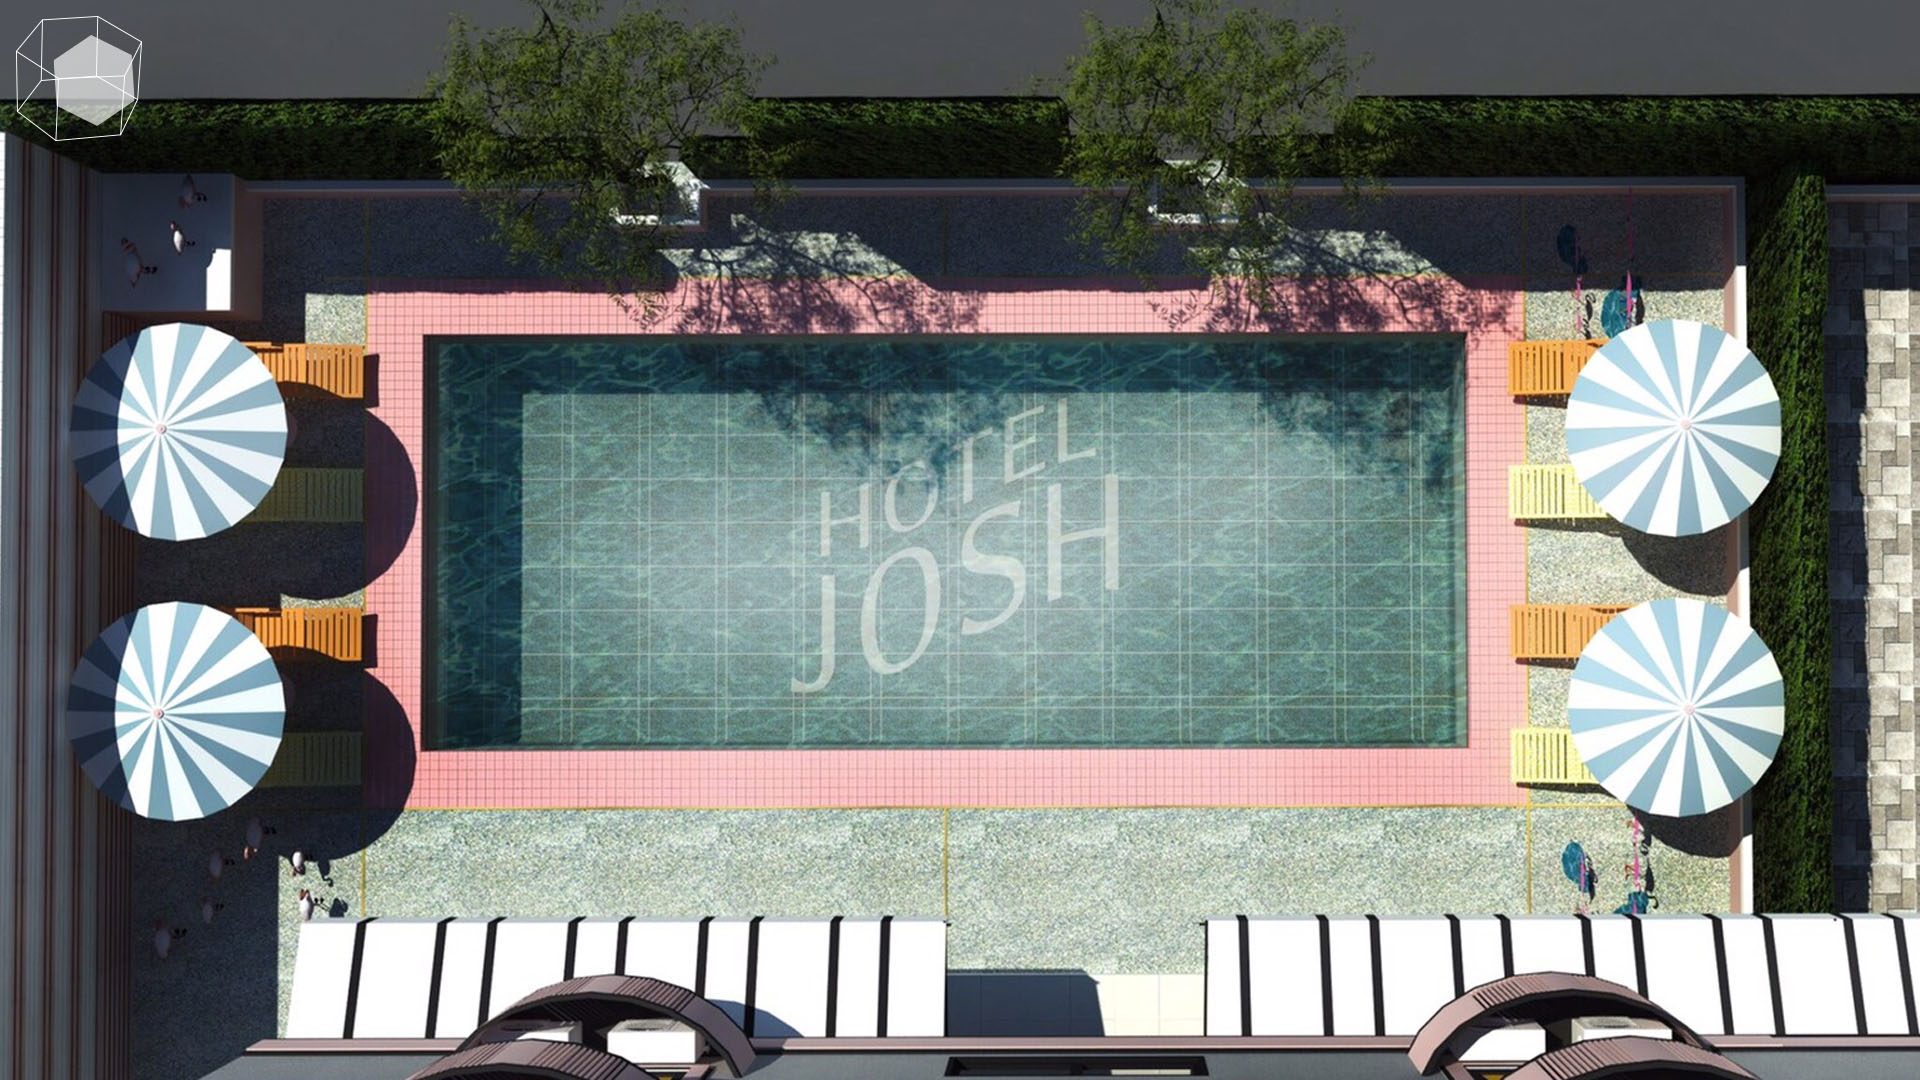 Josh Hotel